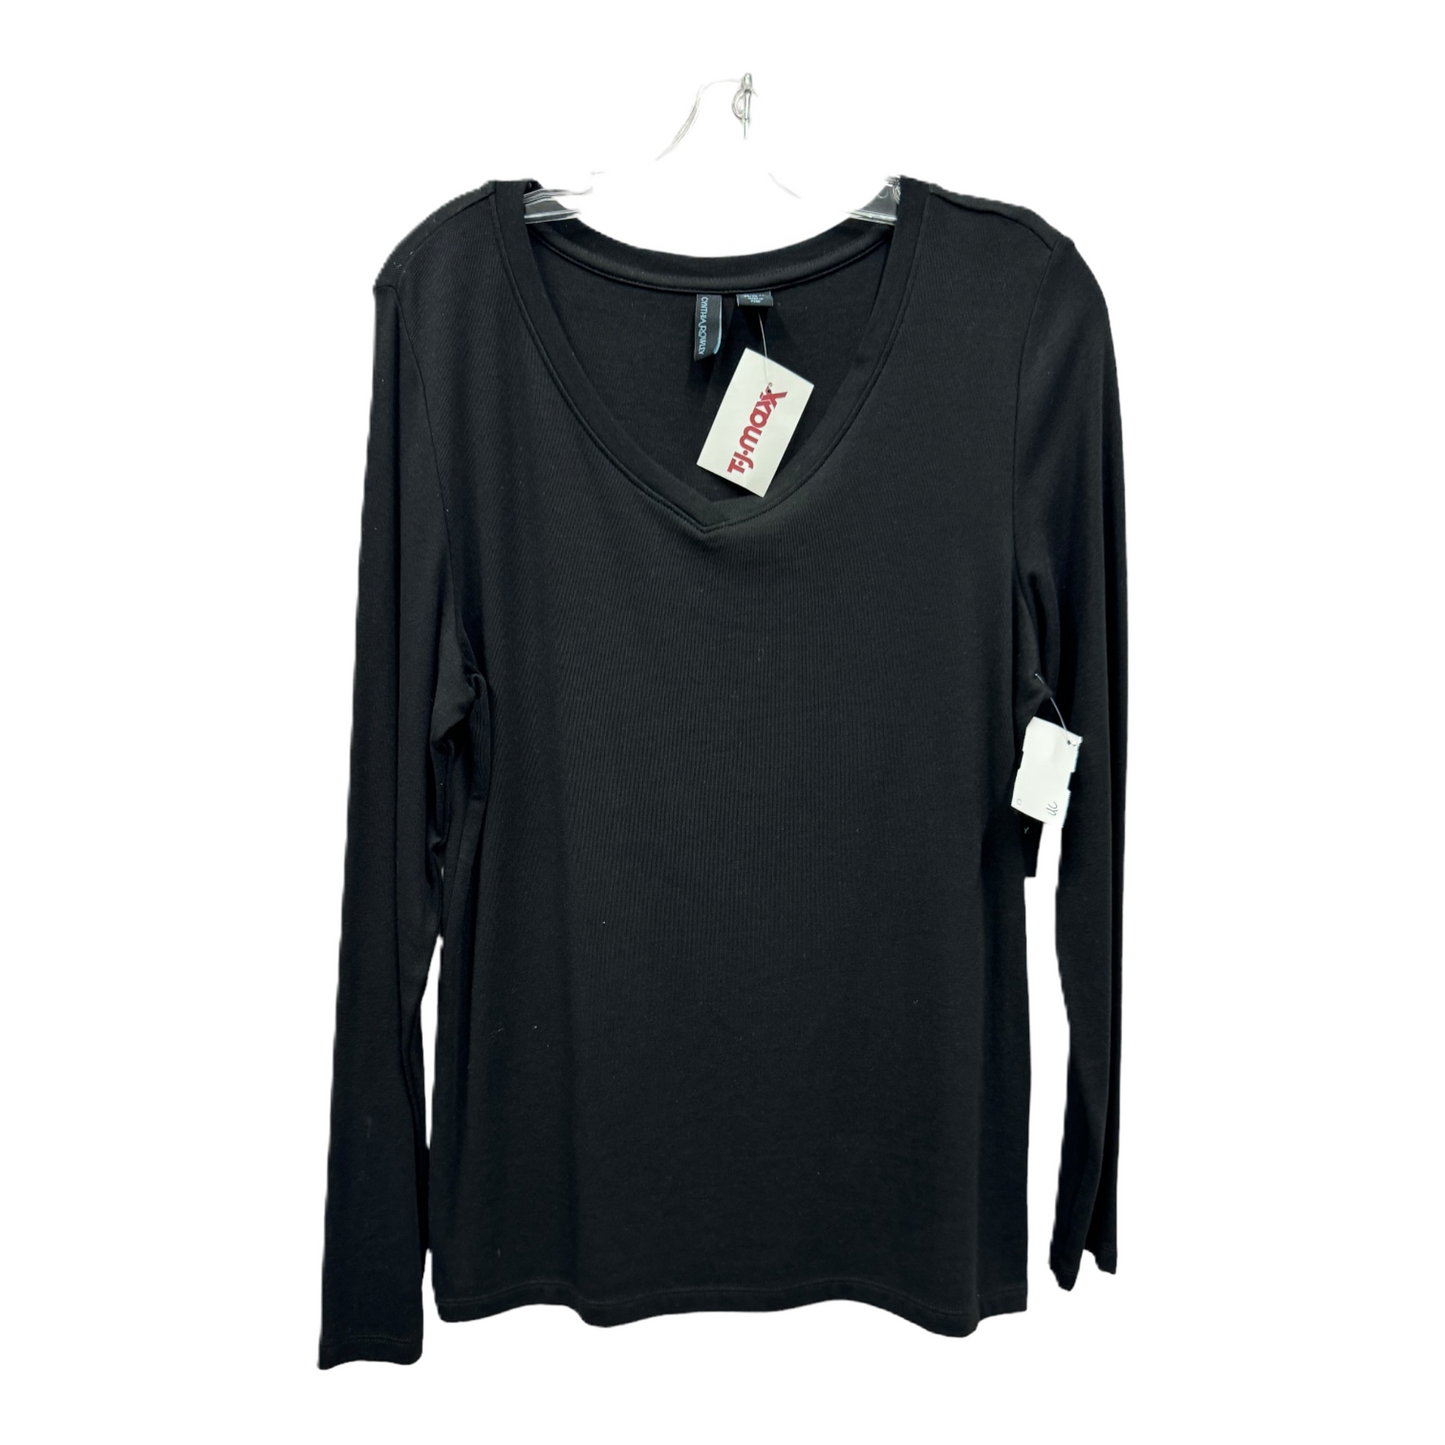 Black Top Long Sleeve By Cynthia Rowley, Size: Xl